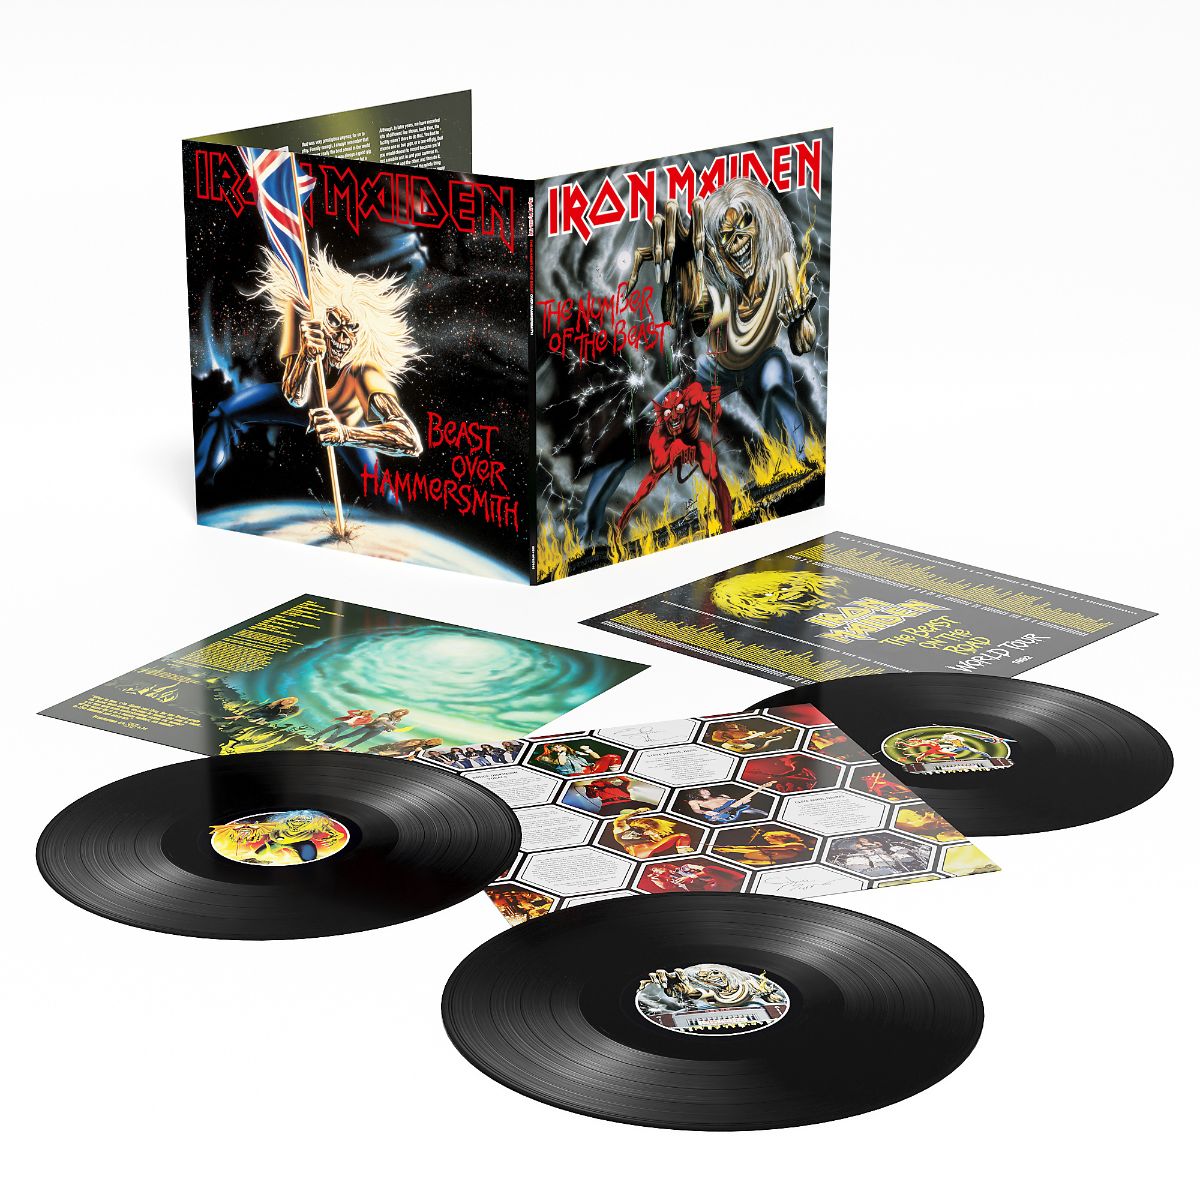 Pročitajte više o članku Trostruko vinilno izdanje Iron Maidena povodom 40. obljetnice albuma “The Number Of The Beast” dostupno za Pre-order